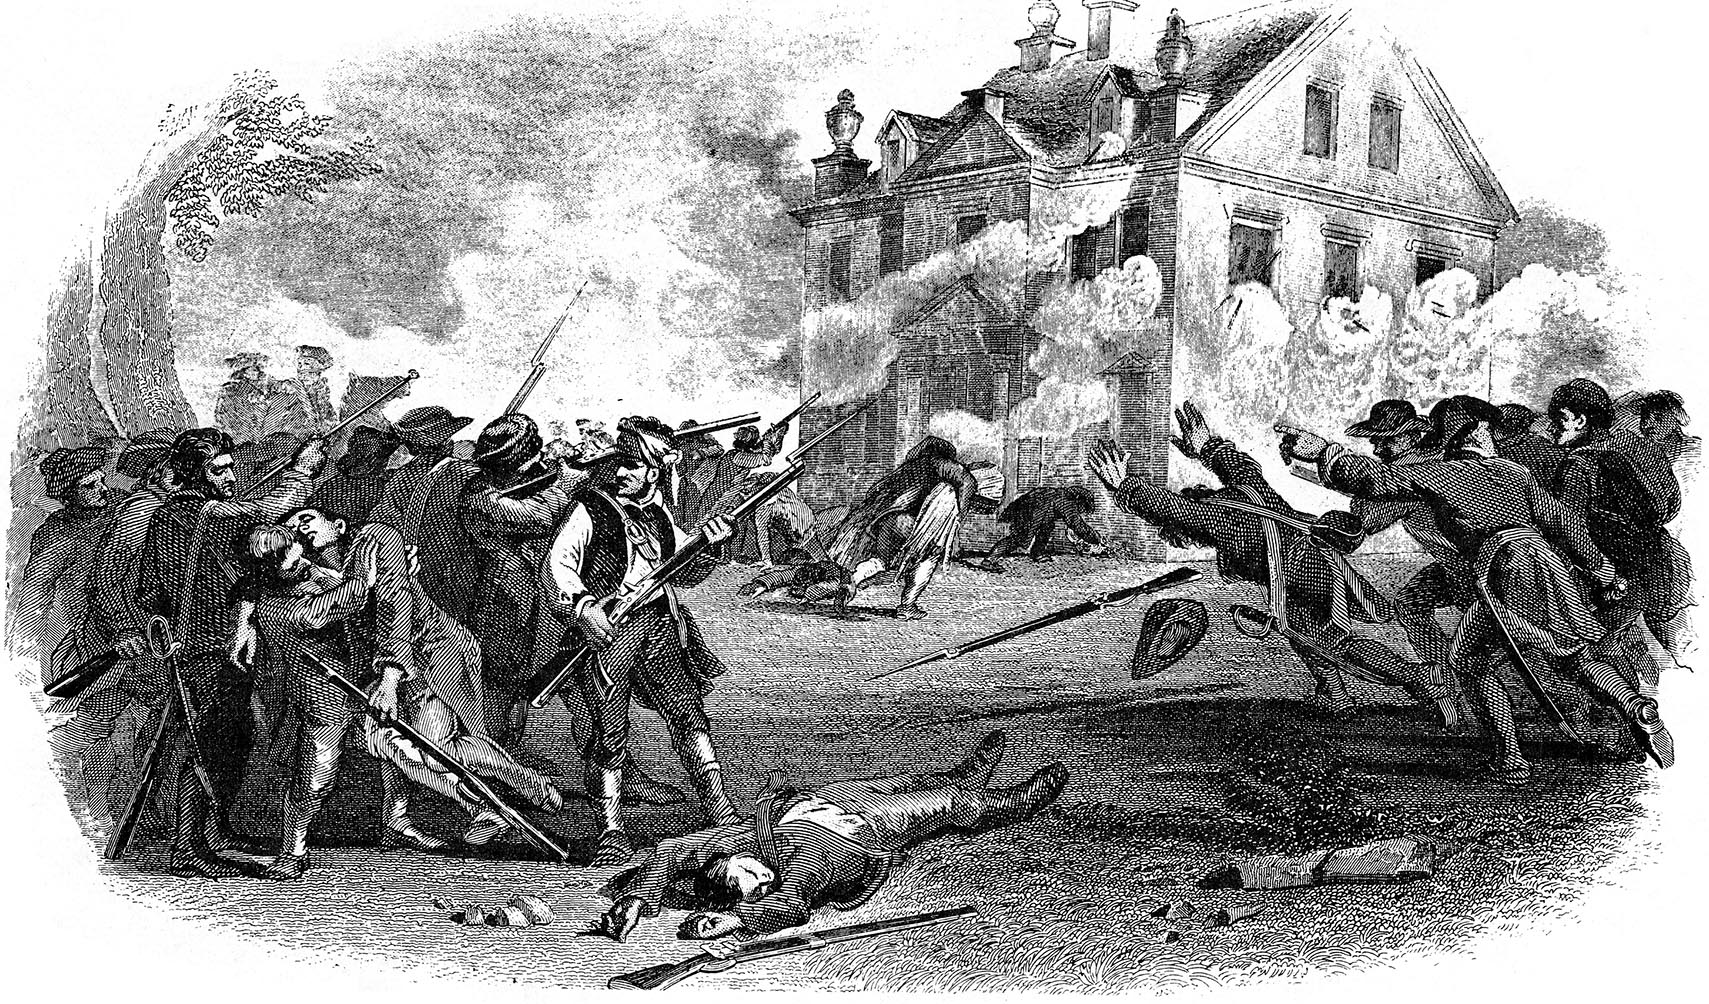 Battle of Germantown